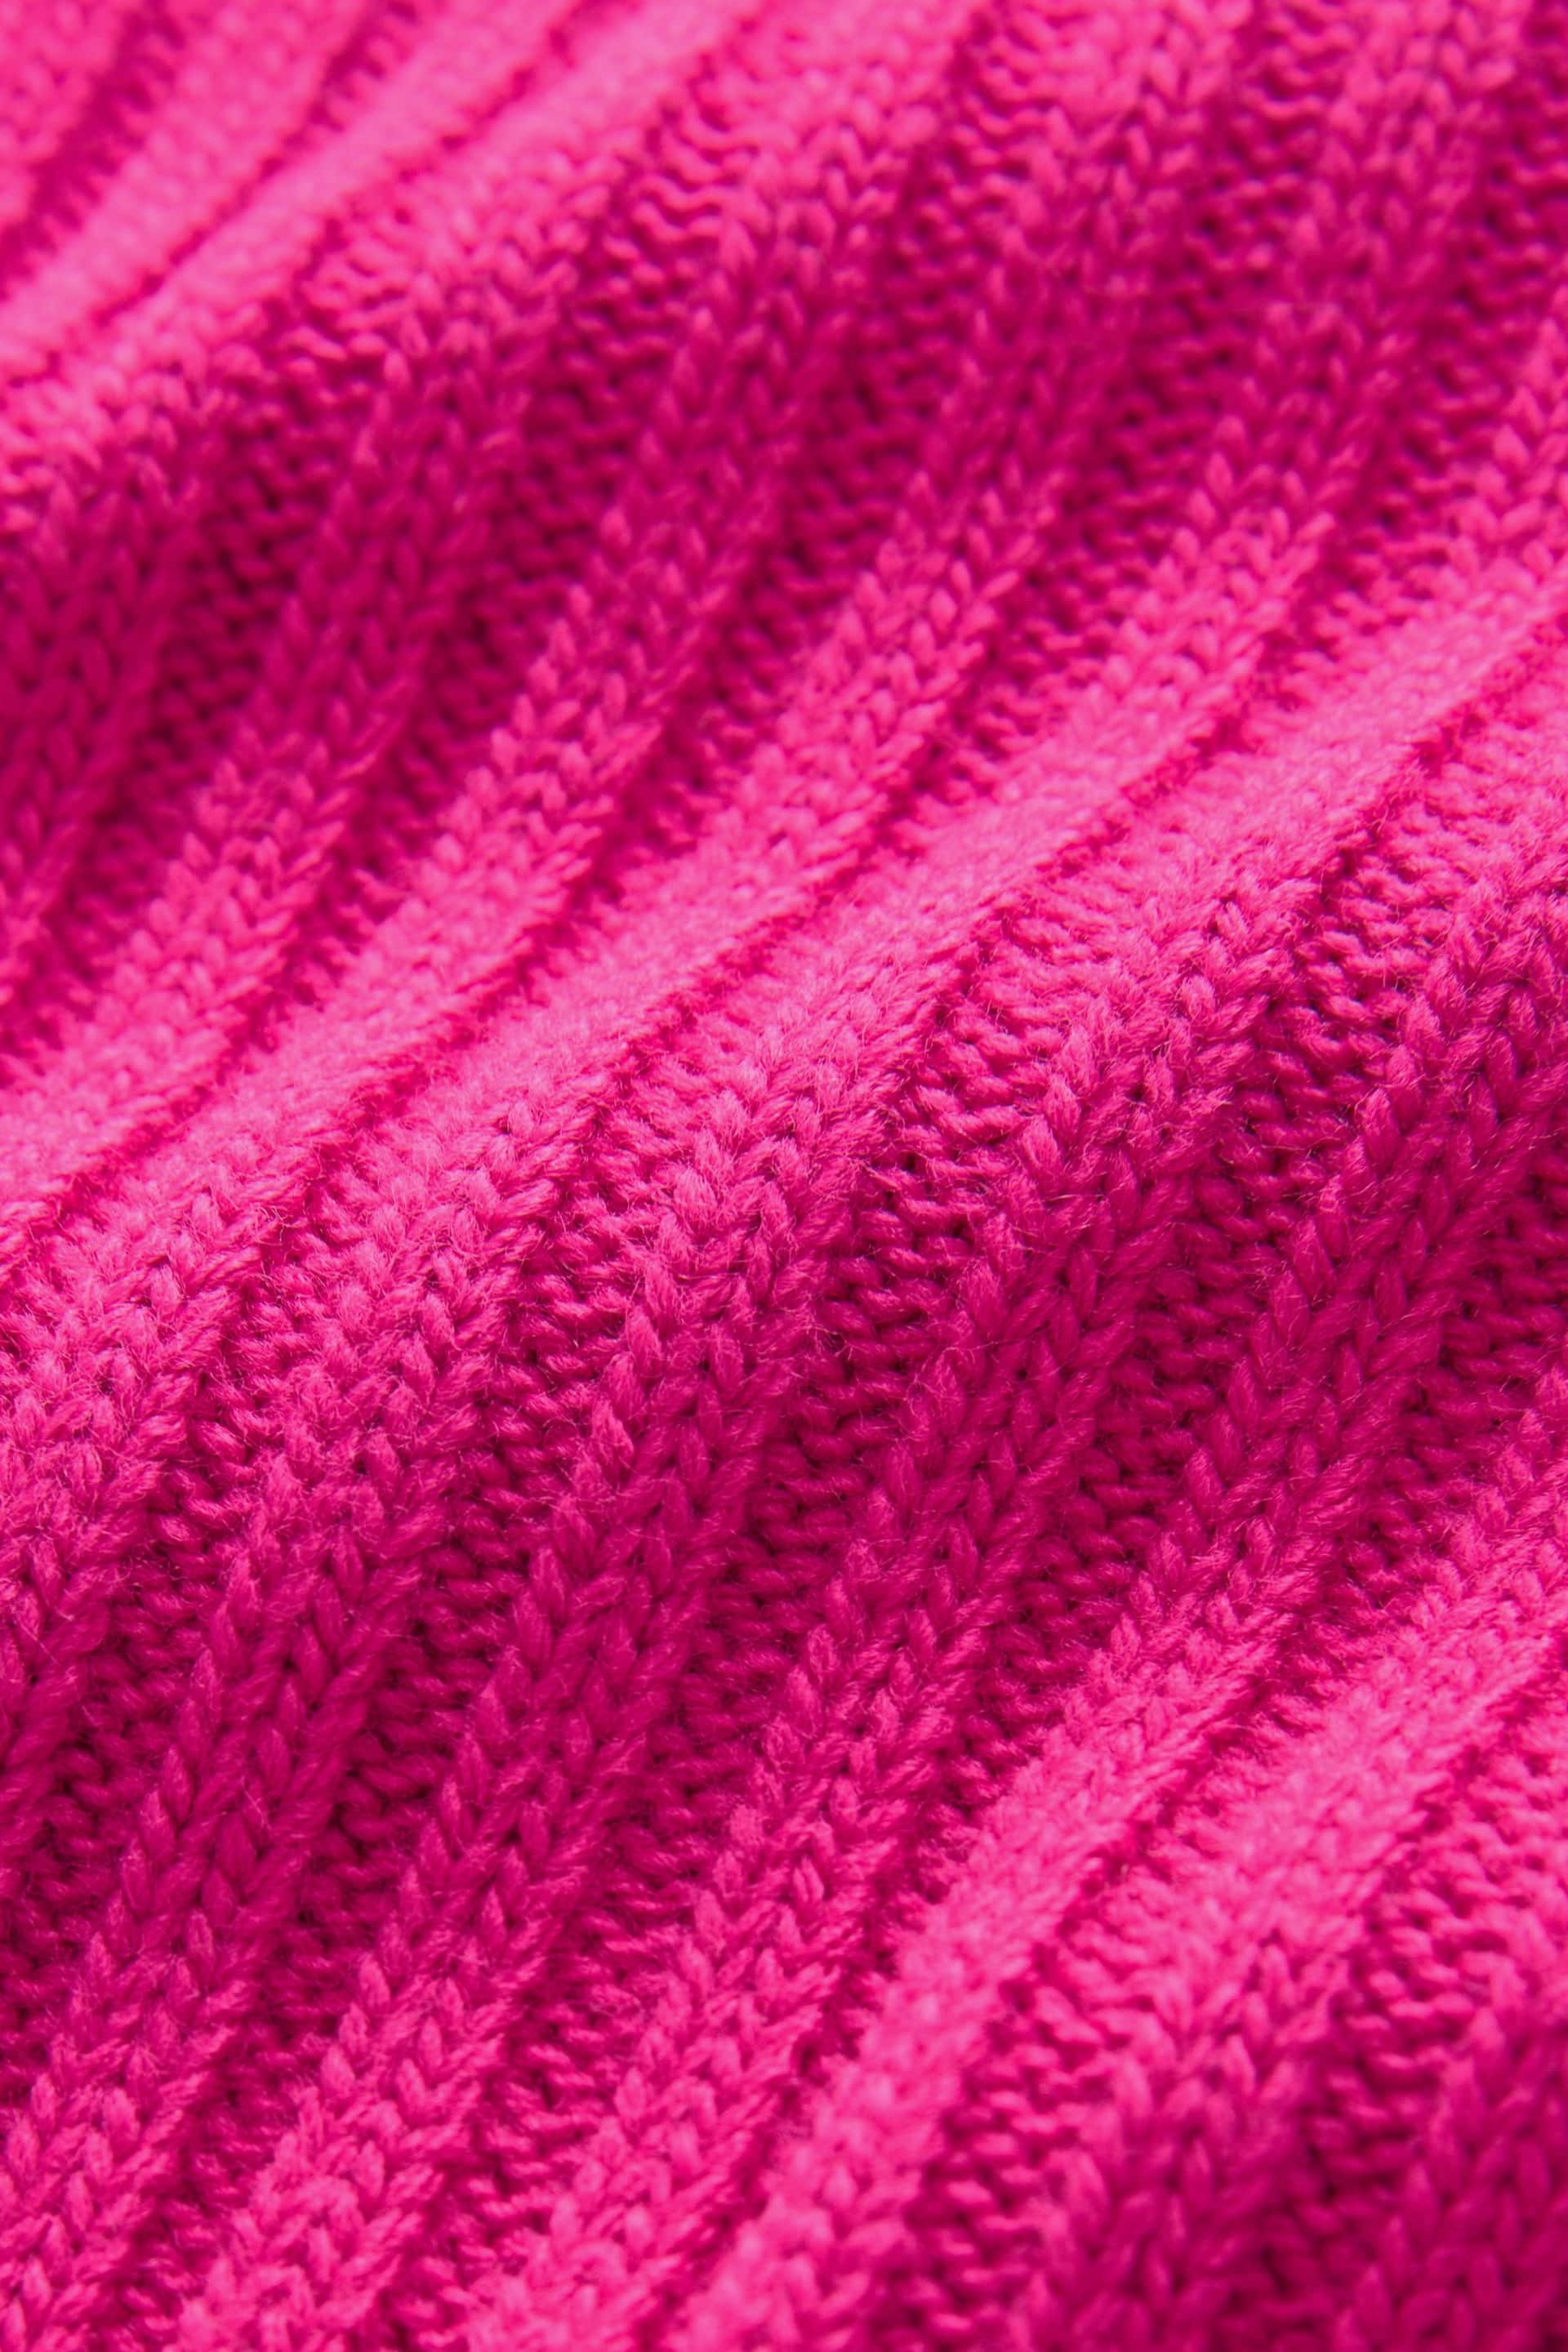 Bright Pink Square Neck Volume Sleeve Jumper - Image 6 of 6